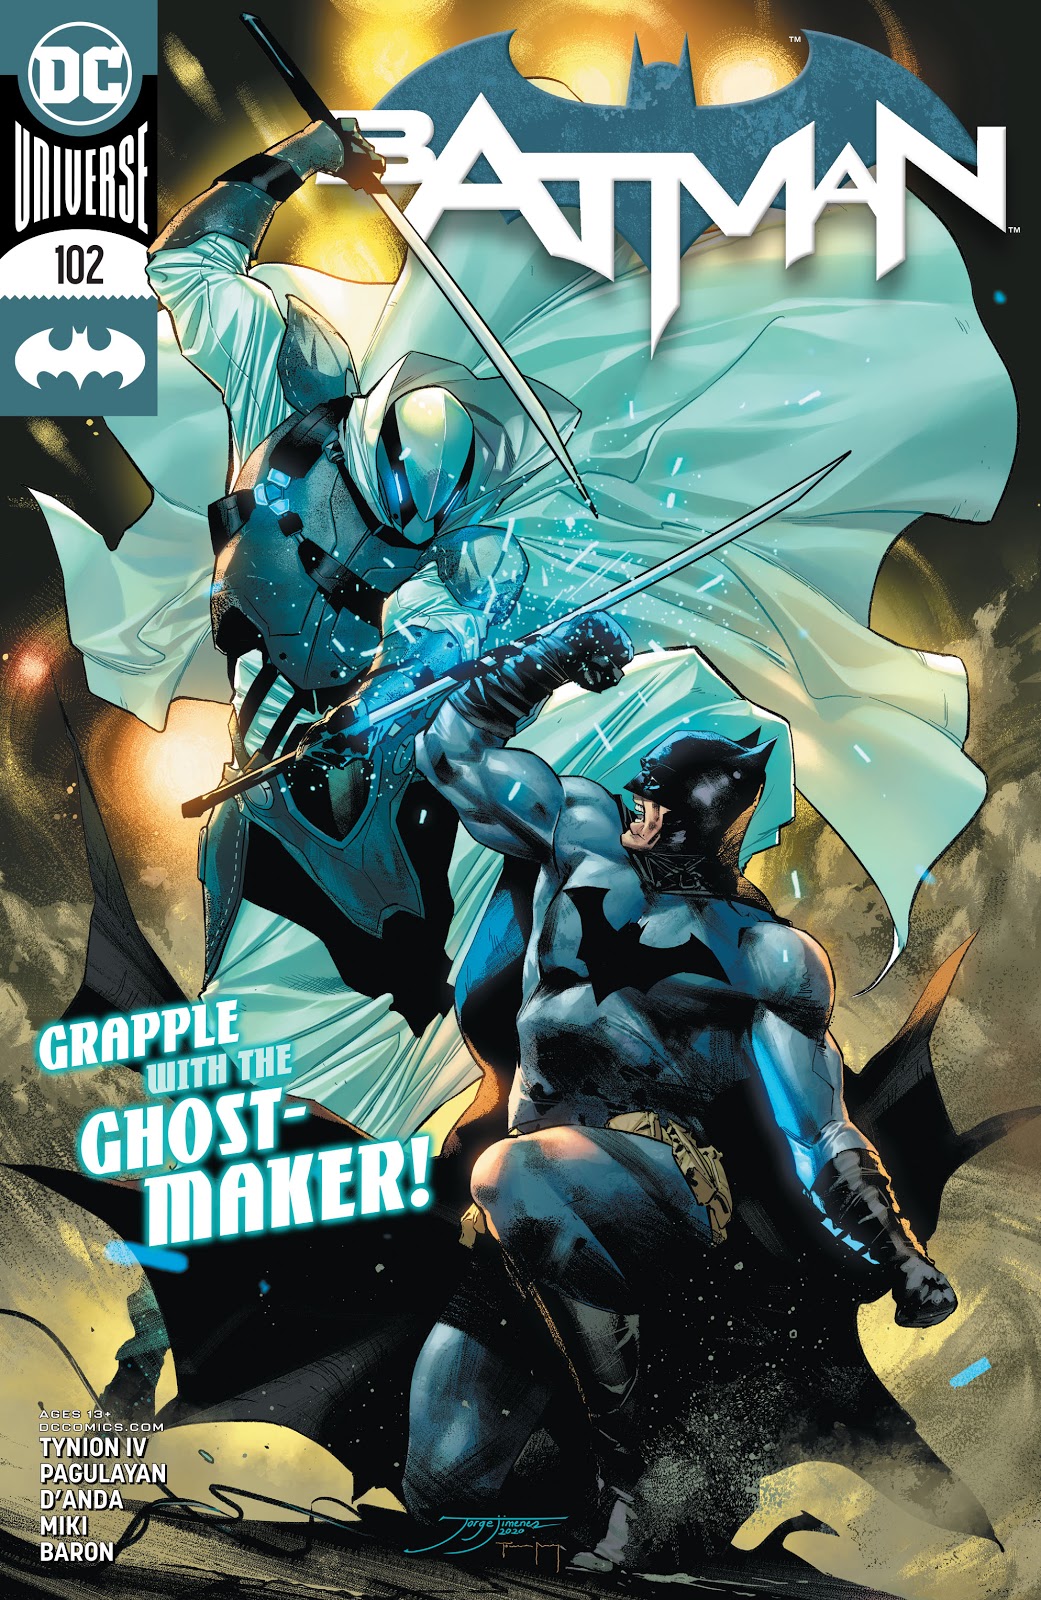 Batman issue 102 review